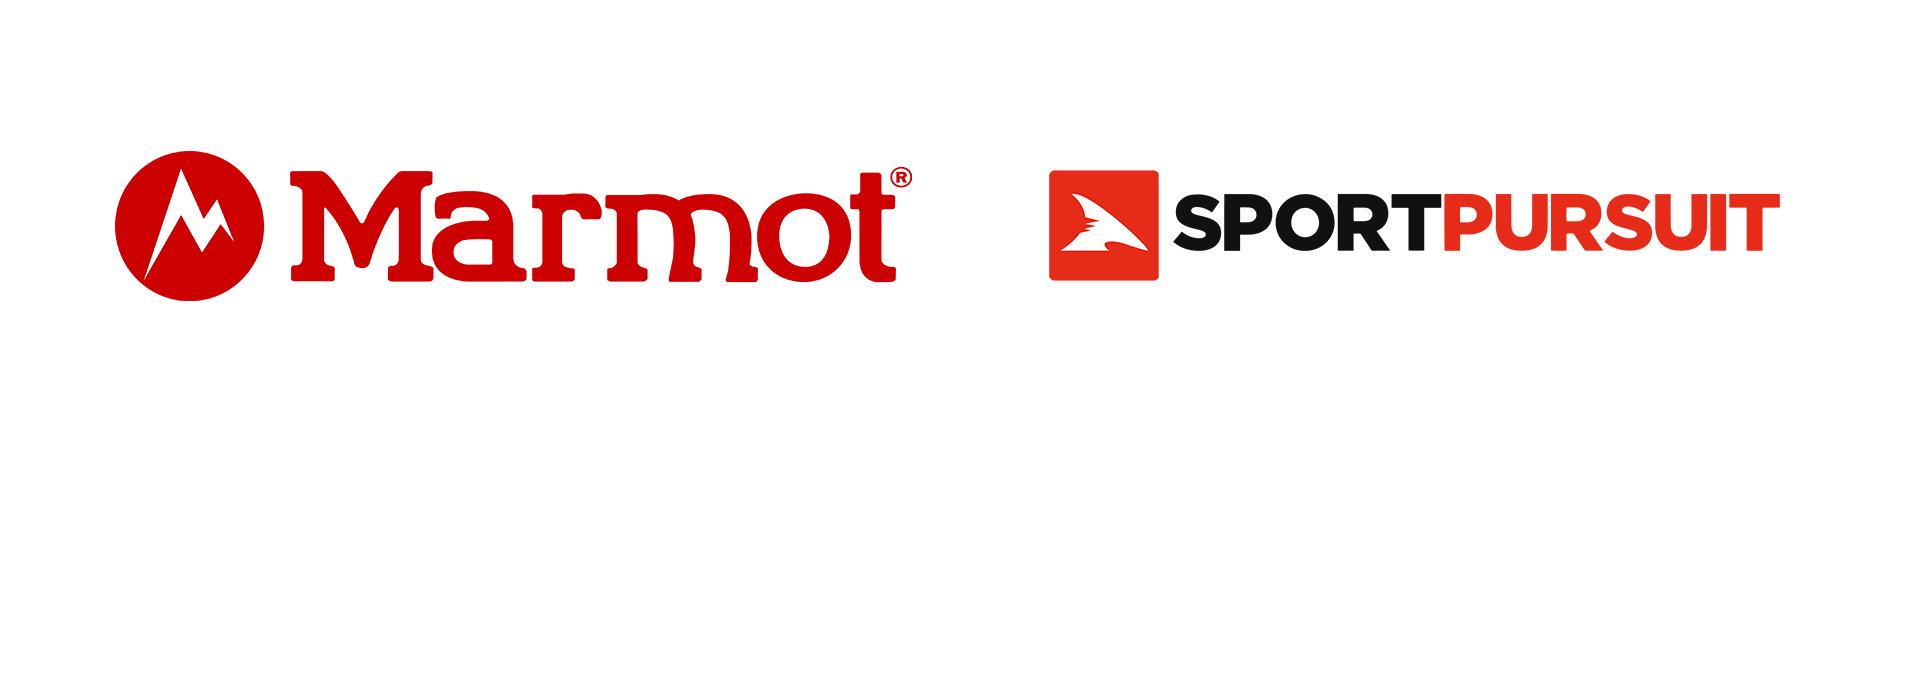 Marmot | Sportpursuit | Blackbox Adventures – Matt Greenwell